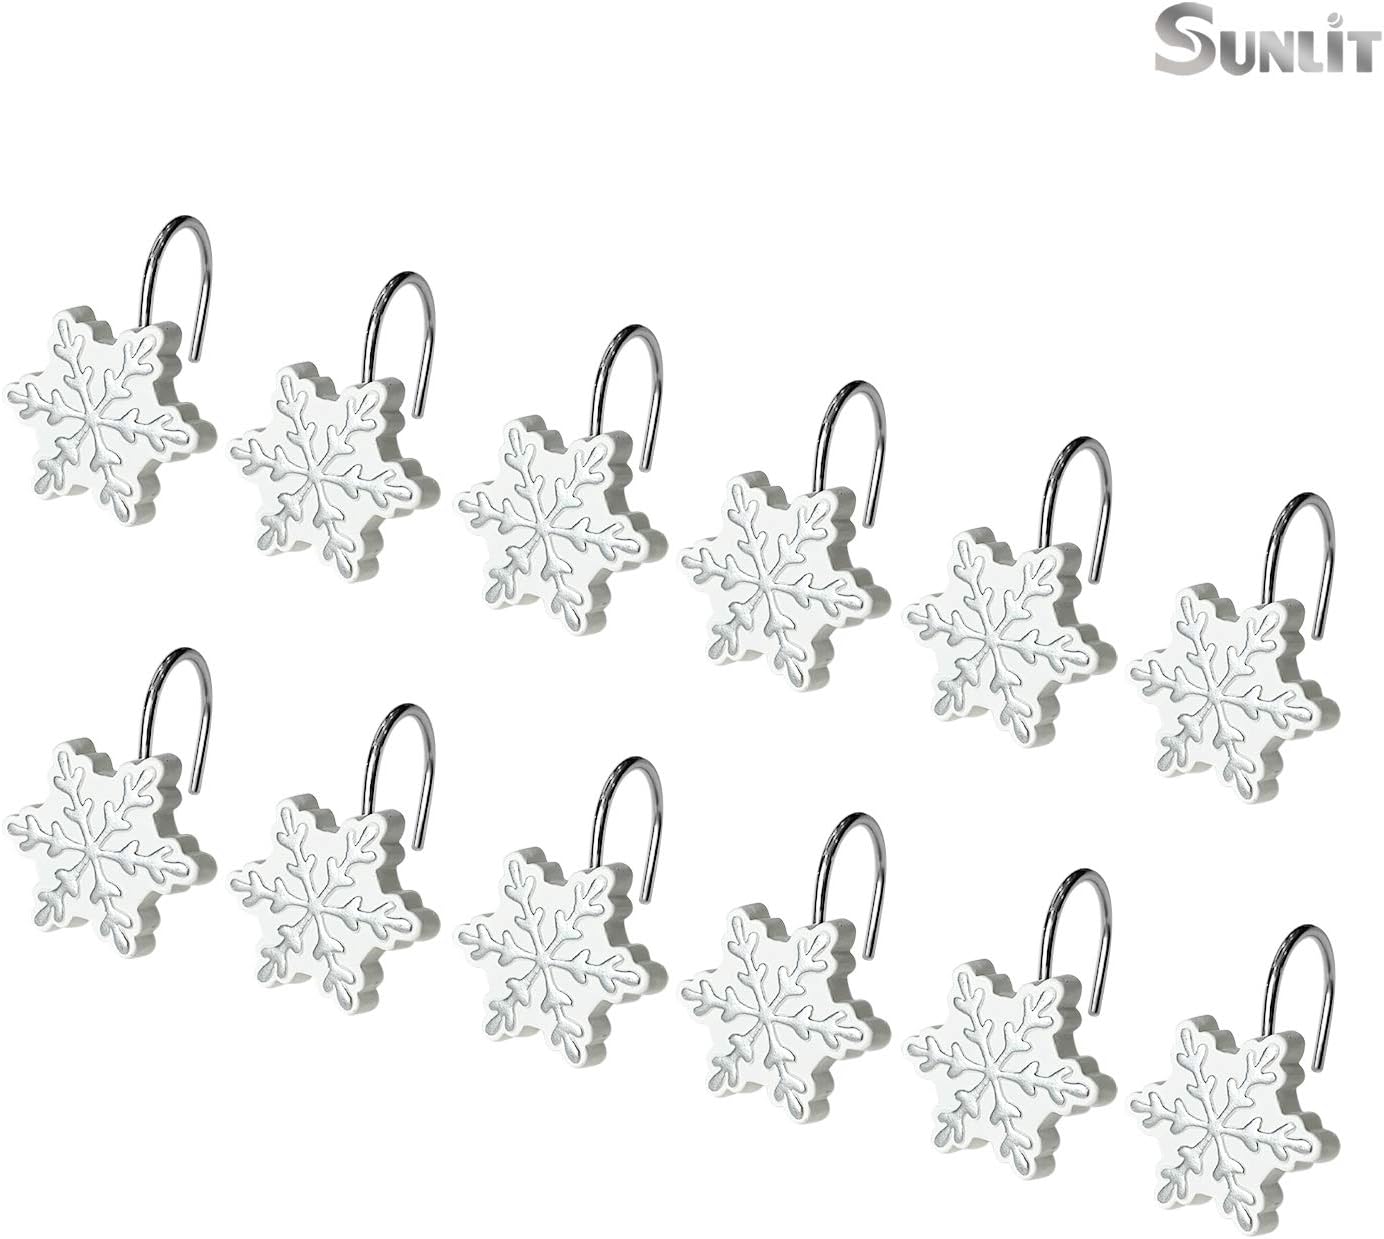 Sunlit Christmas Shower Curtain Hooks Snowflakes Shower Curtain Rings, Resin, White and Light Blue Christmas Decor, Winter Bathroom Decoration - 12 Pack